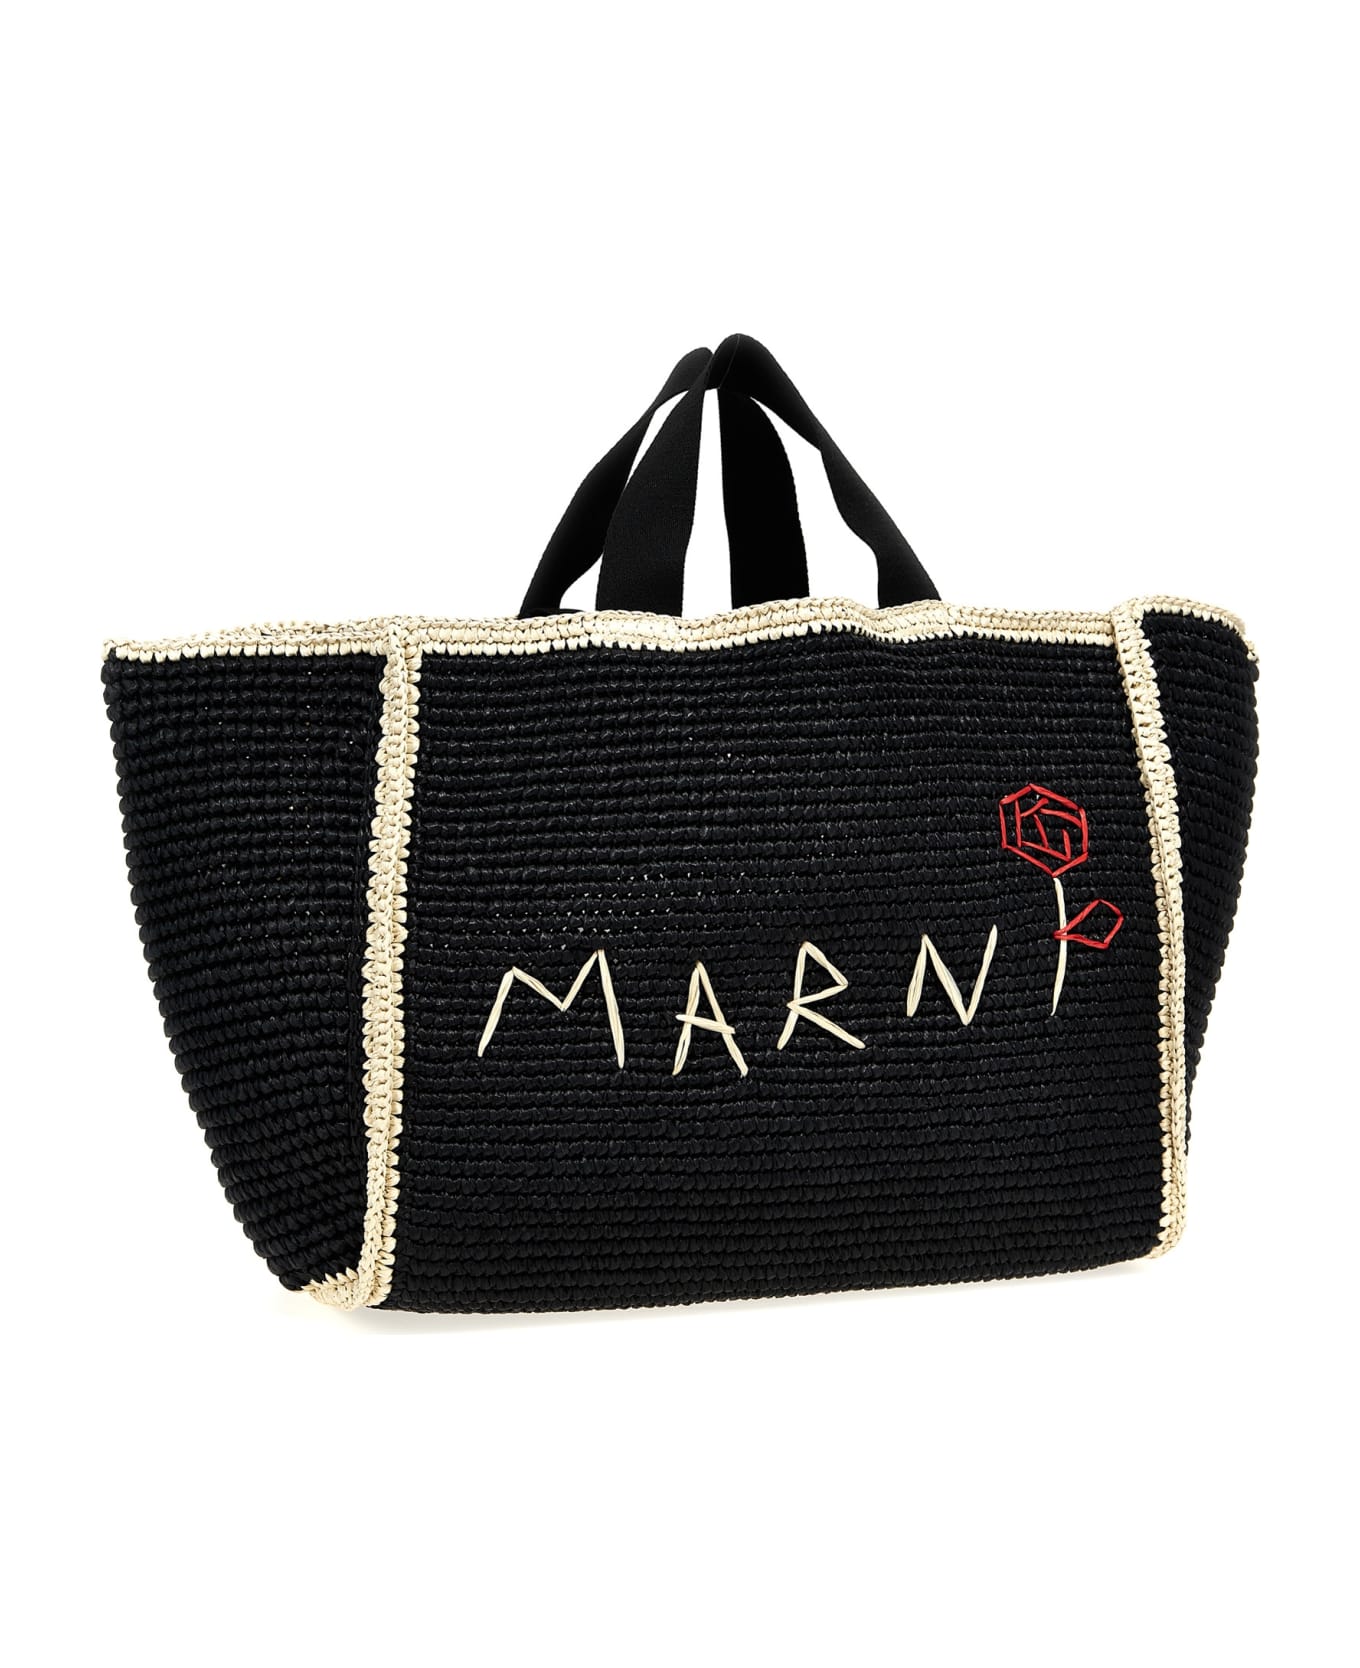 Marni Macramé Shopping Bag - Black/ivory/black トートバッグ